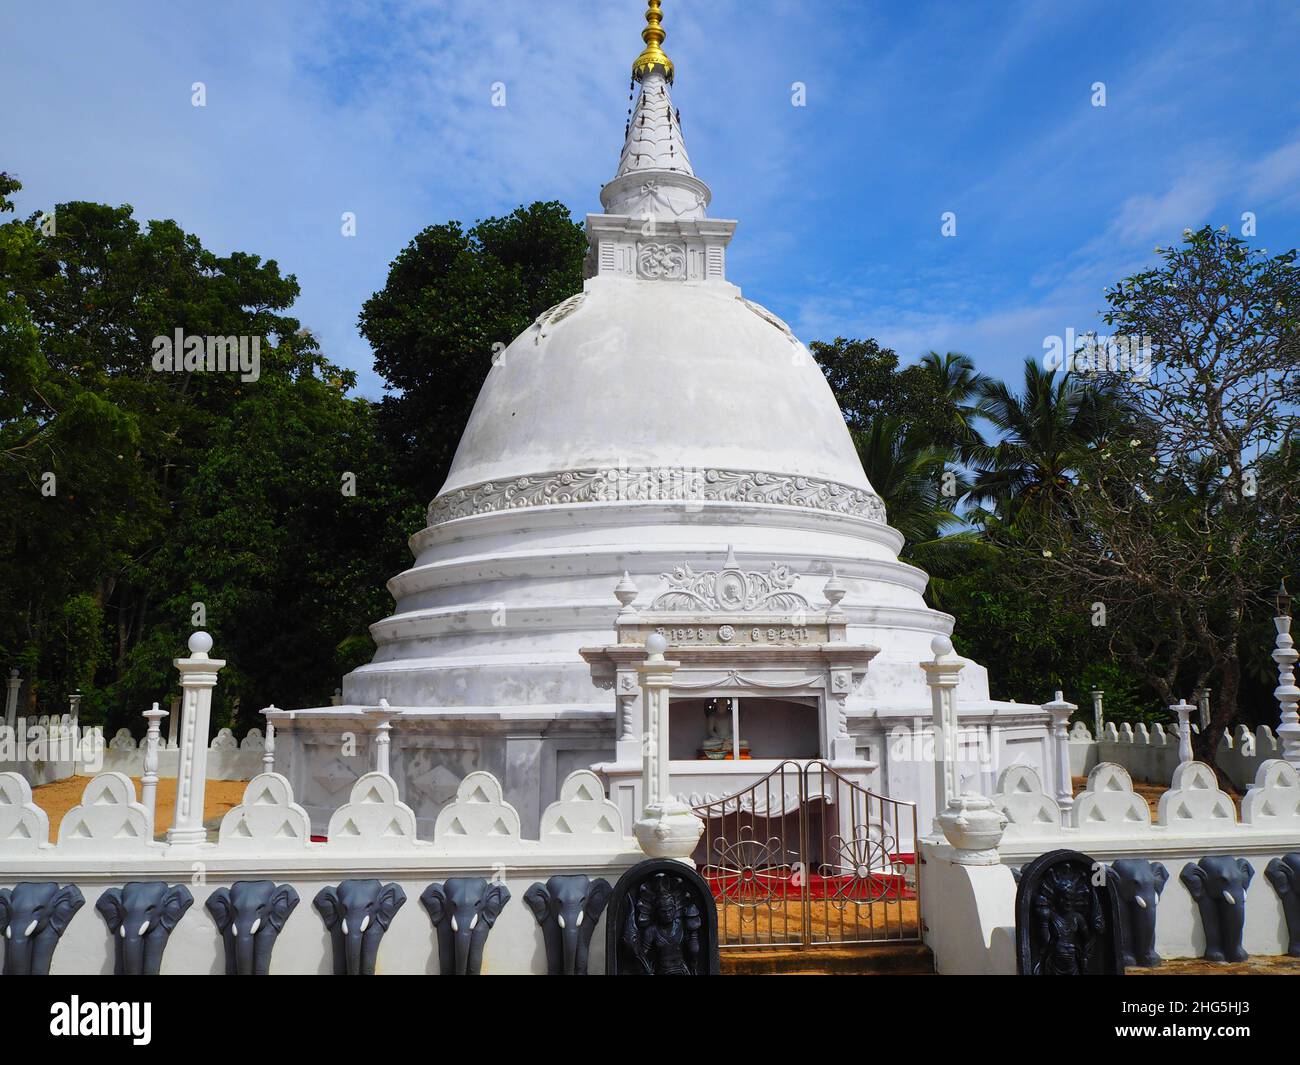 Pagoda, Temple, Buddhism, Travel again South East Asia  #Asia #aroundtheworld #hinterland #authentic #fernweh #slowtravel #loveasia Stock Photo